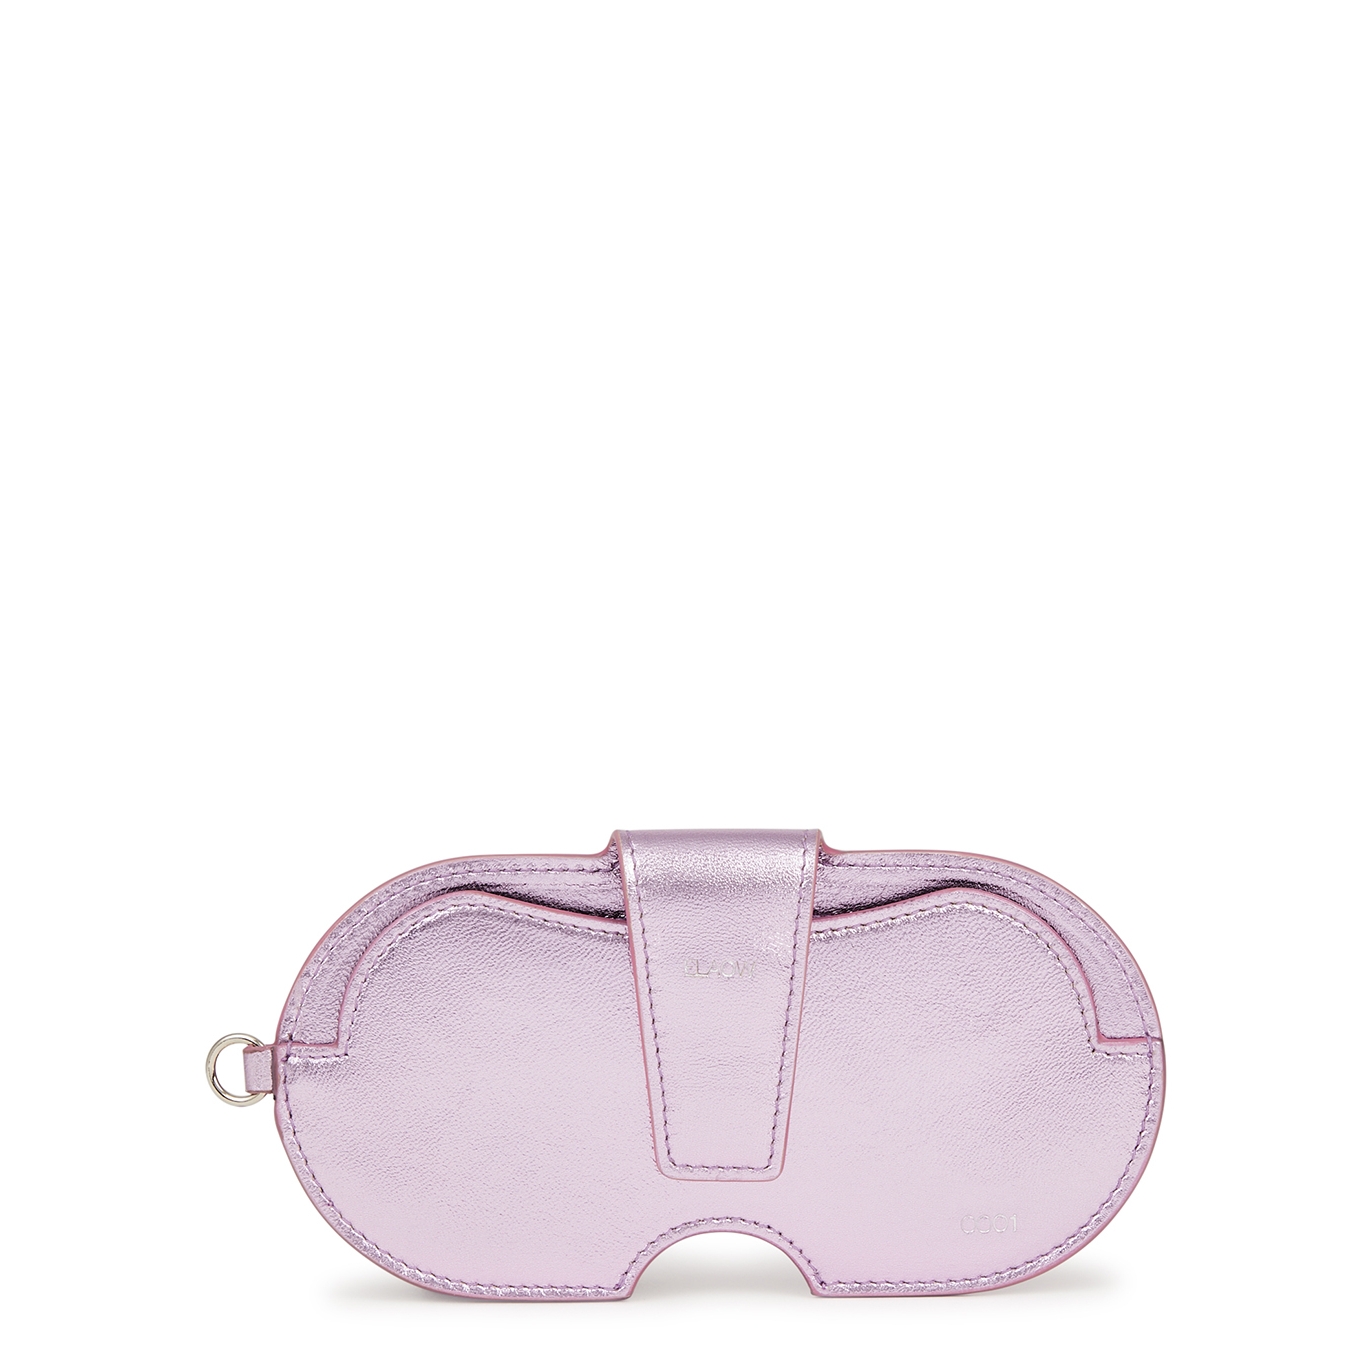 Elaow Metallic Leather Sunglasses Case - Pink - One Size